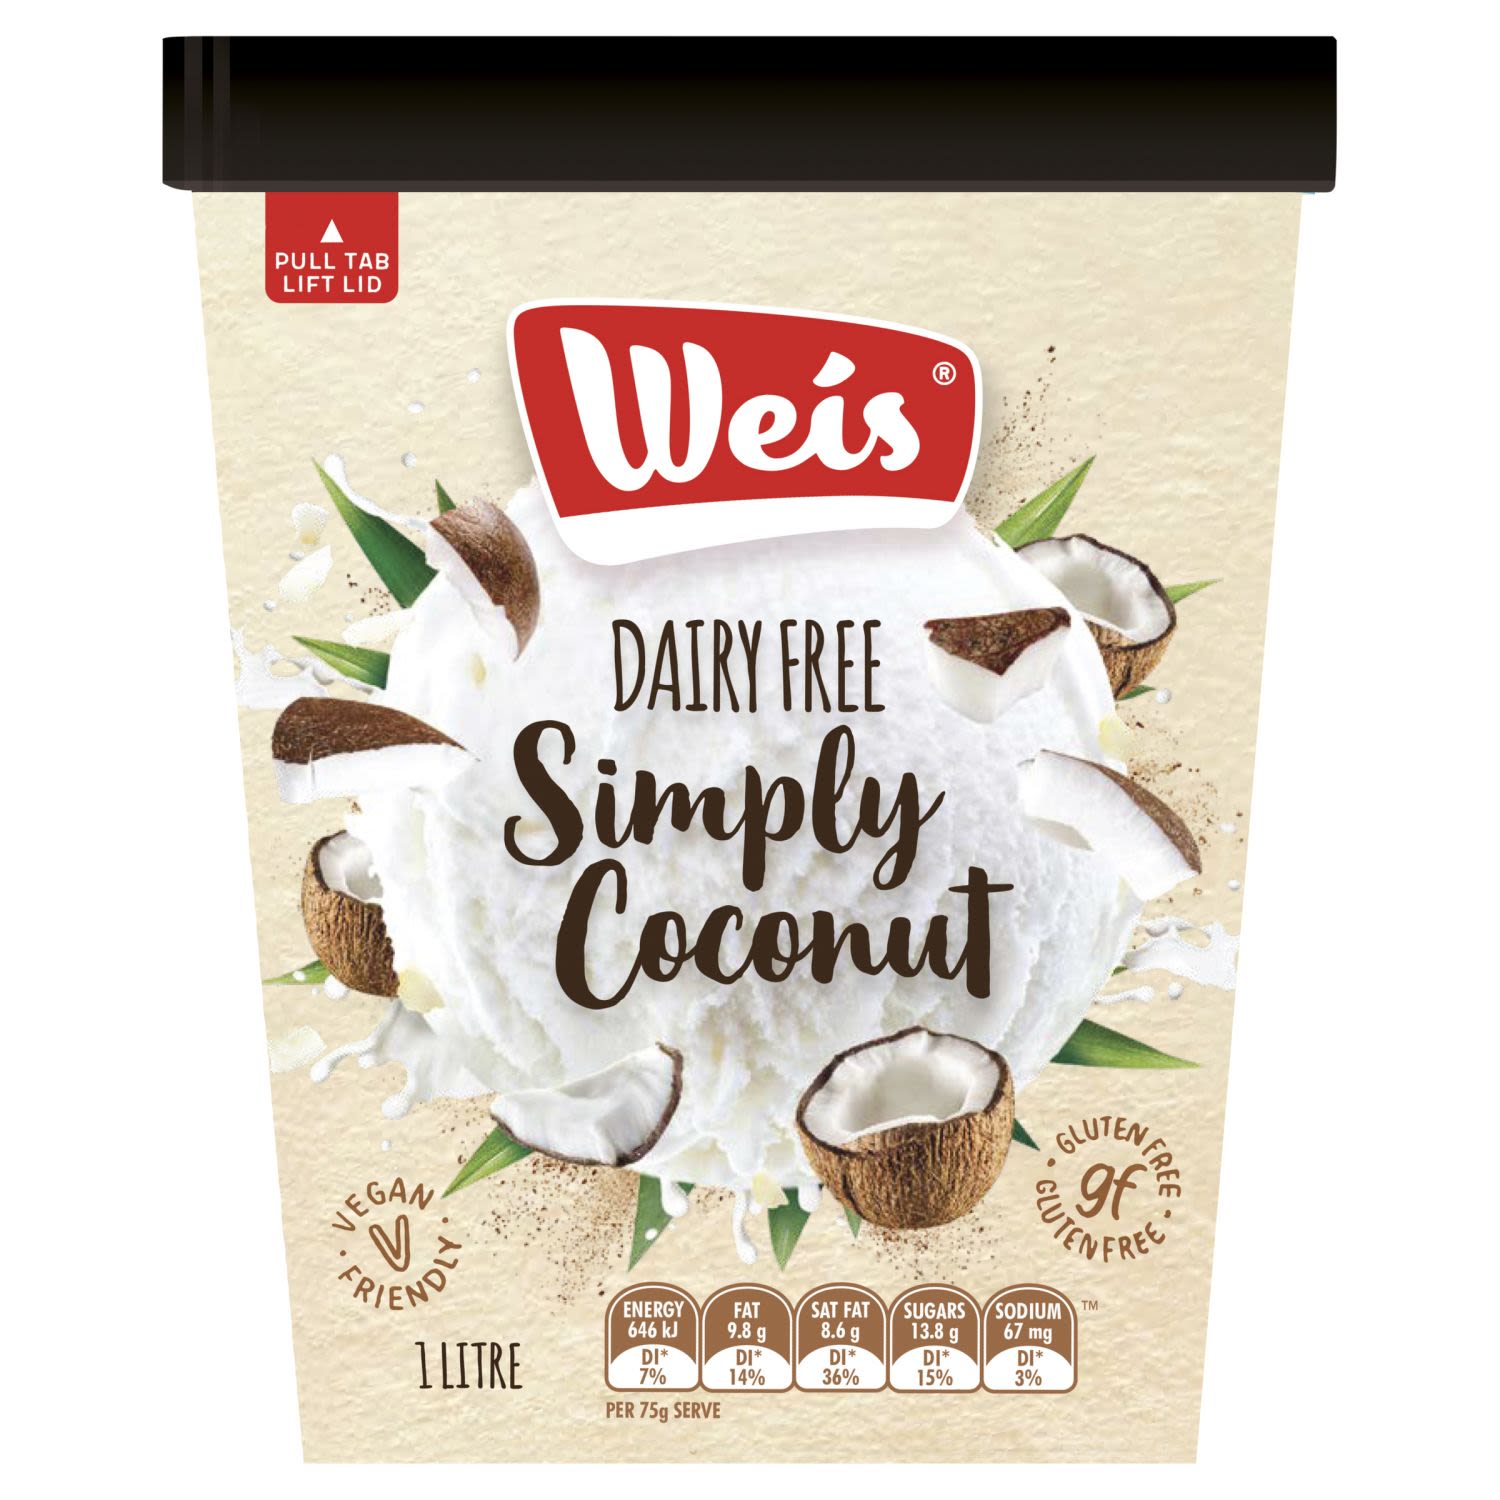 Weis Ice Cream Dairy Free Coconut, 1 Litre